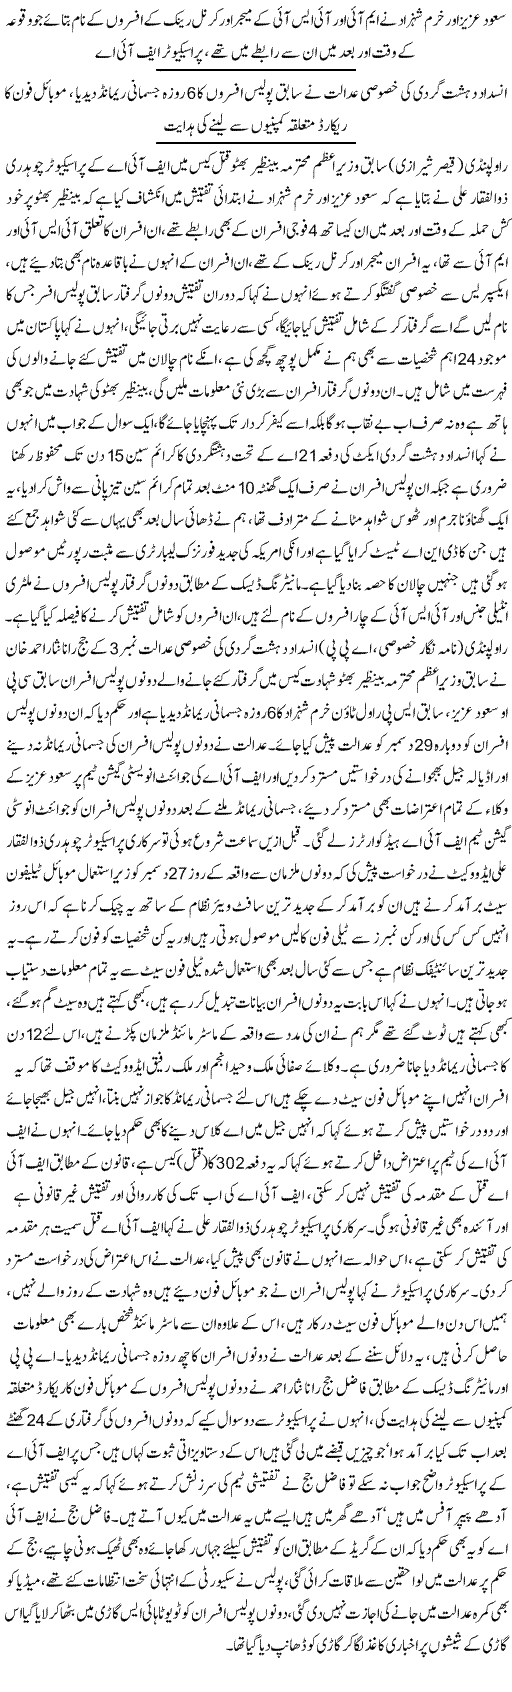 Benazir Murder Investigation From Secret Agencies - Urdu National News